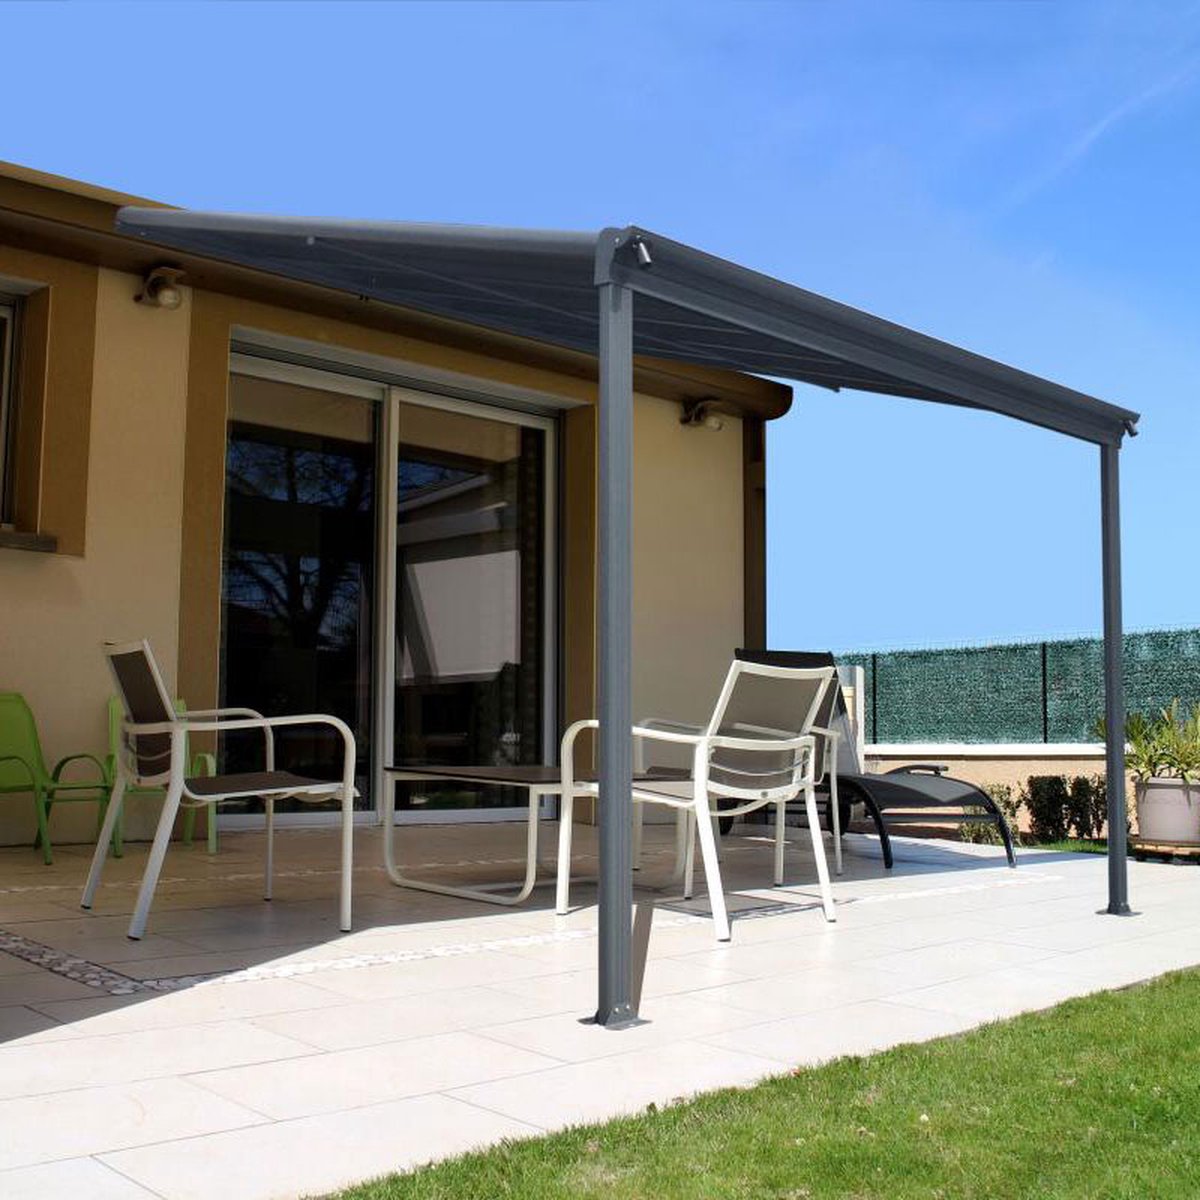 Rockford terrasoverkapping 3.1x3 m - Overkapping tuin met opaal polycarbonaat voor zonwering - Veranda van aluminium en weerbestendig - Antraciet - Rockford